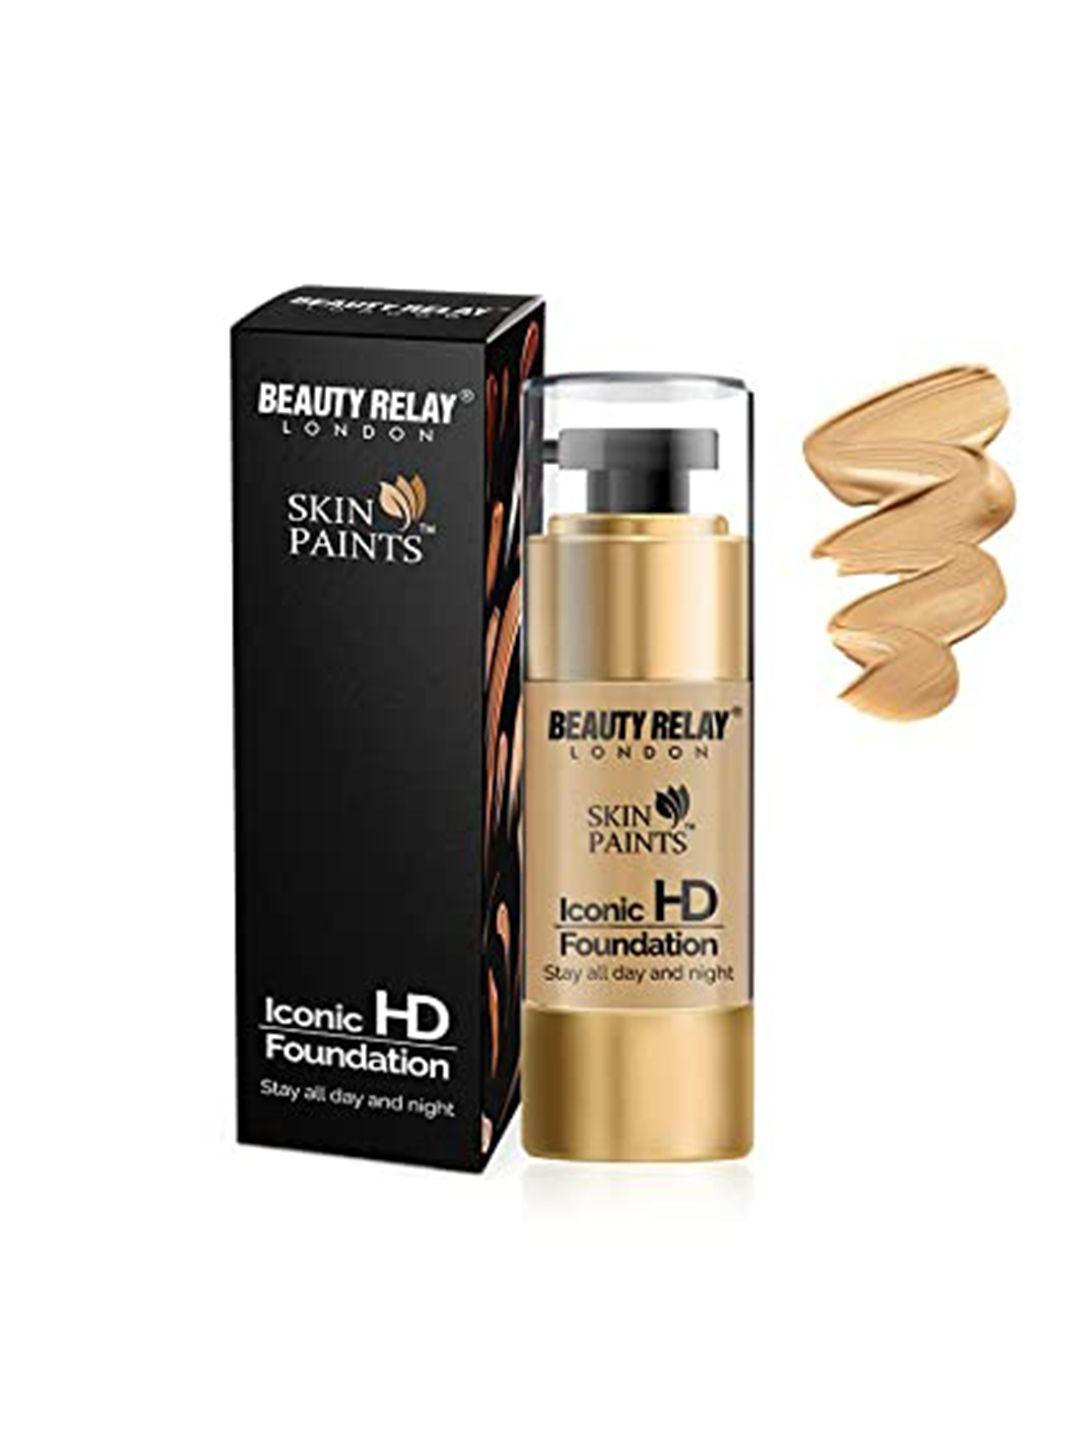 beautyrelay-london-skin-paints-iconic-hd-foundation-30ml---soft-tan-228